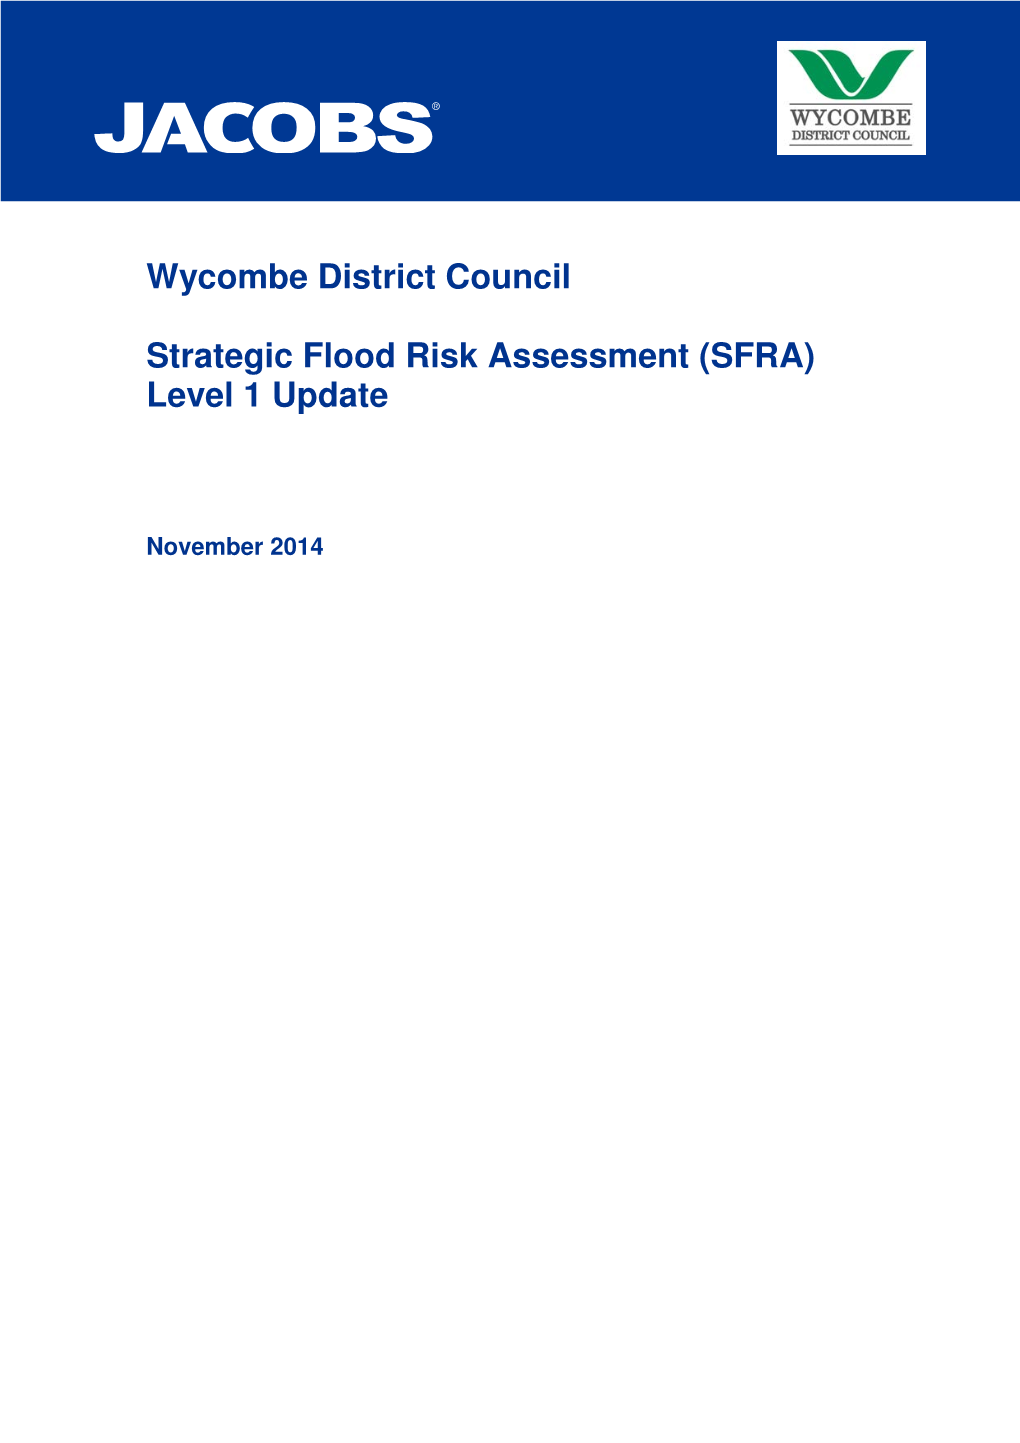 Wycombe Strategic Flood Risk Assessment (SFRA) Level 1 Update